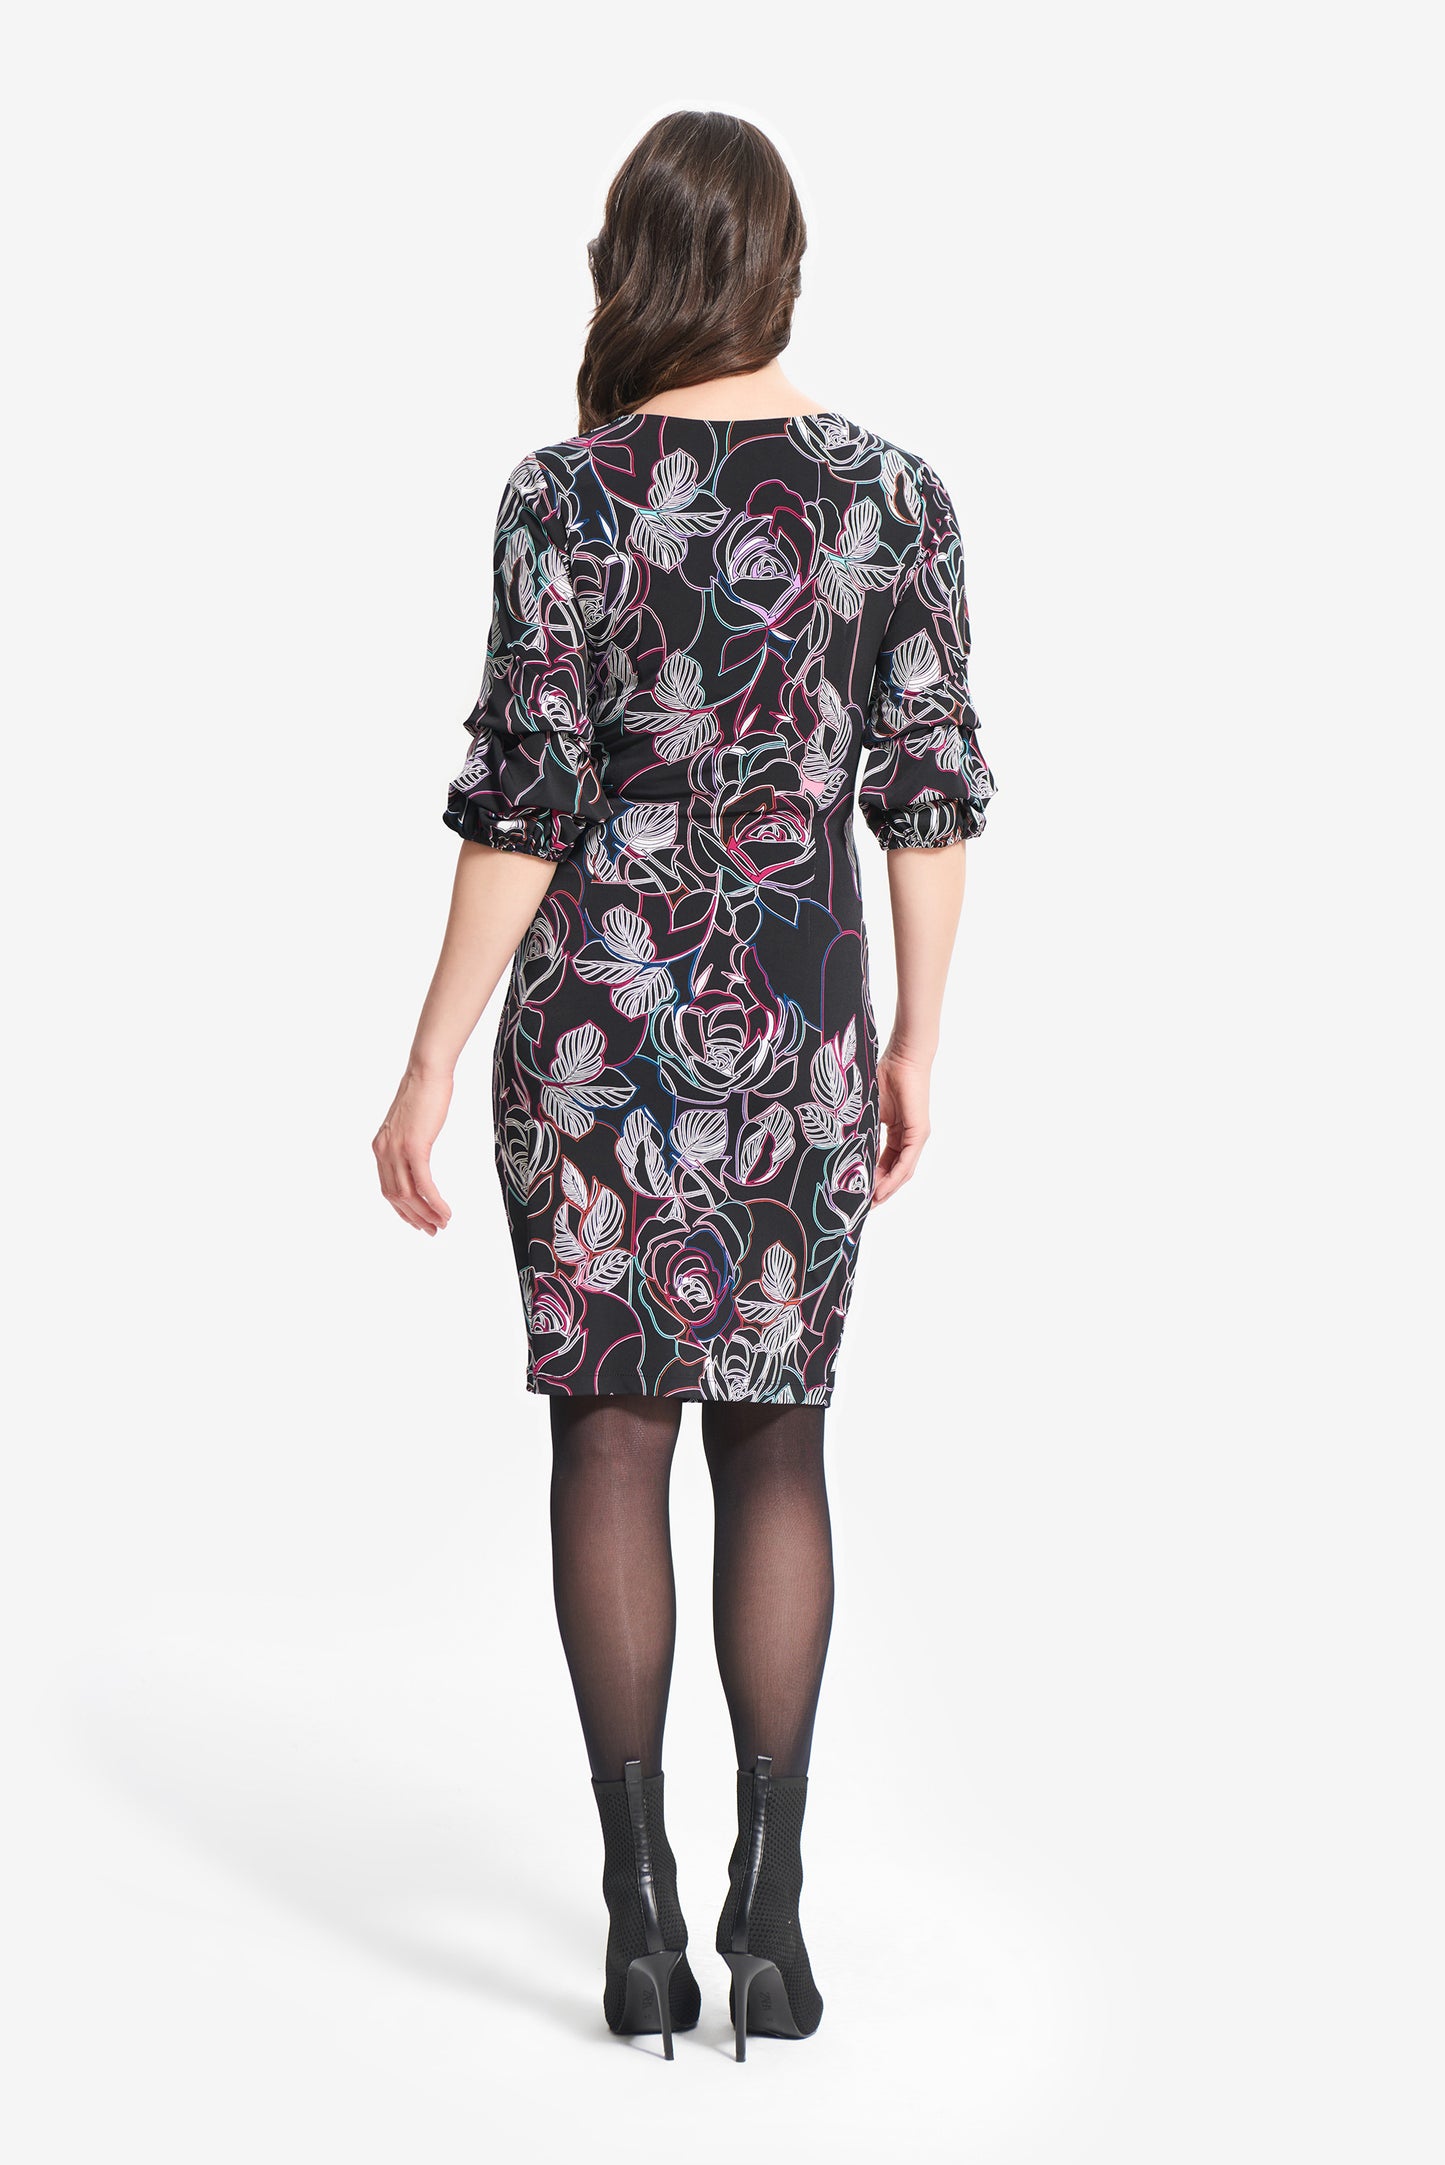 Joseph Ribkoff - Ruffle Sleeved Floral Dress - Style 214134